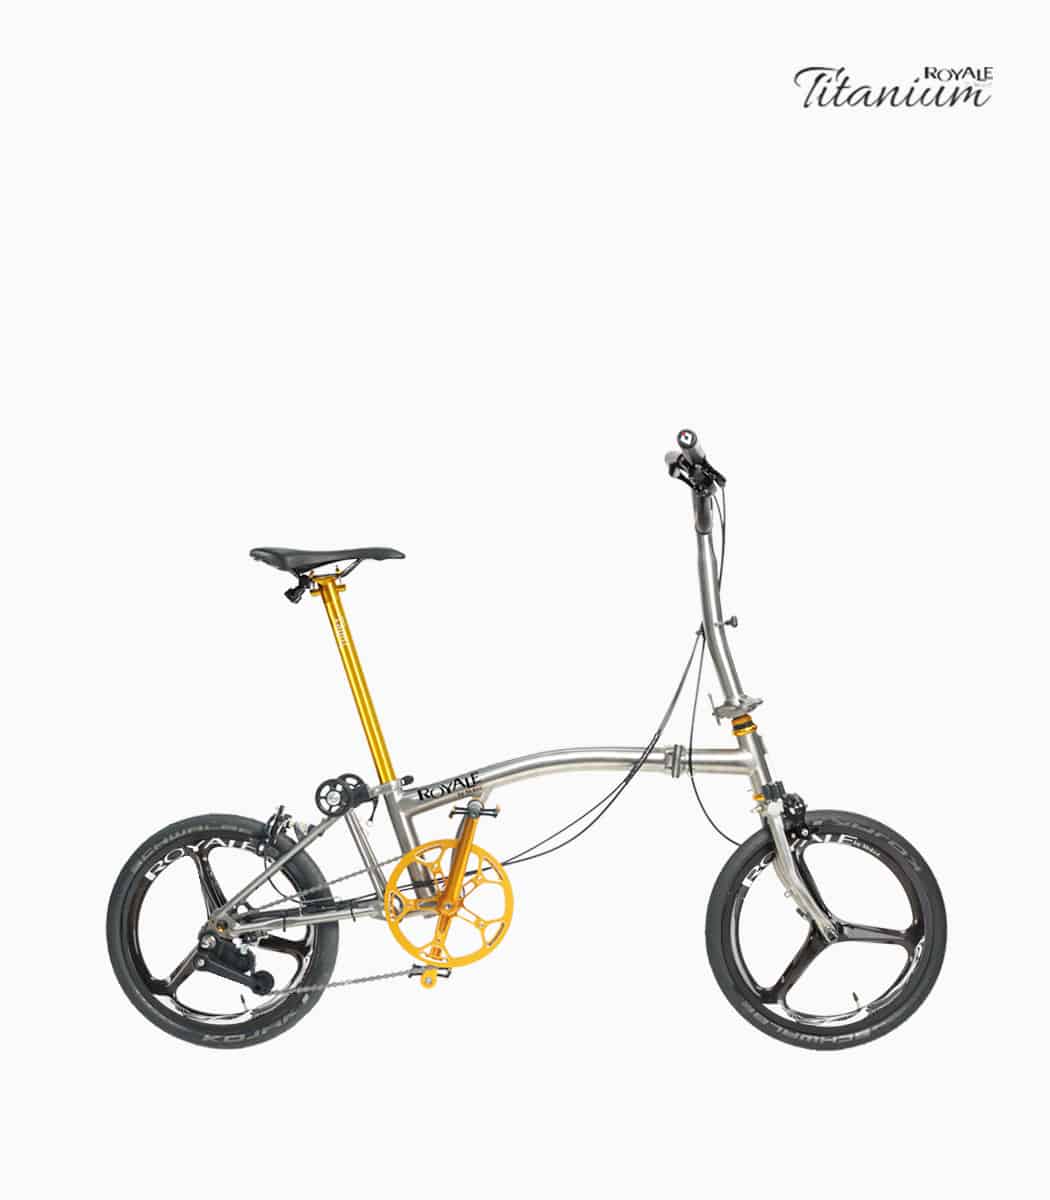 ROYALE Titanium M3 (TITANIUM SILVER) foldable bicycle with carbon tri-spoke rims right V1